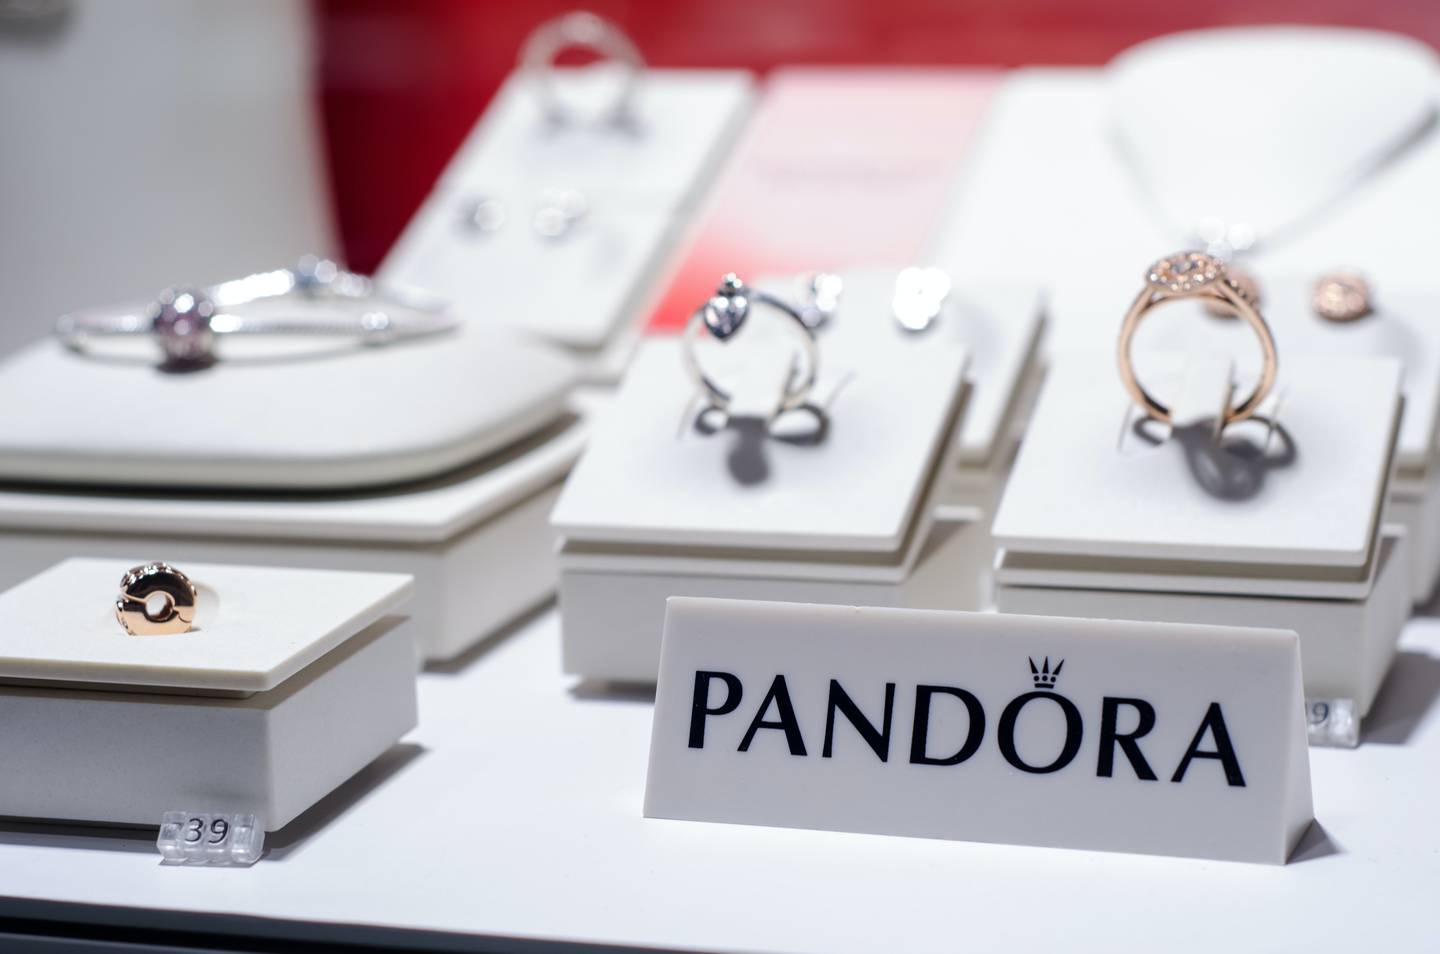 Pandora jewellery